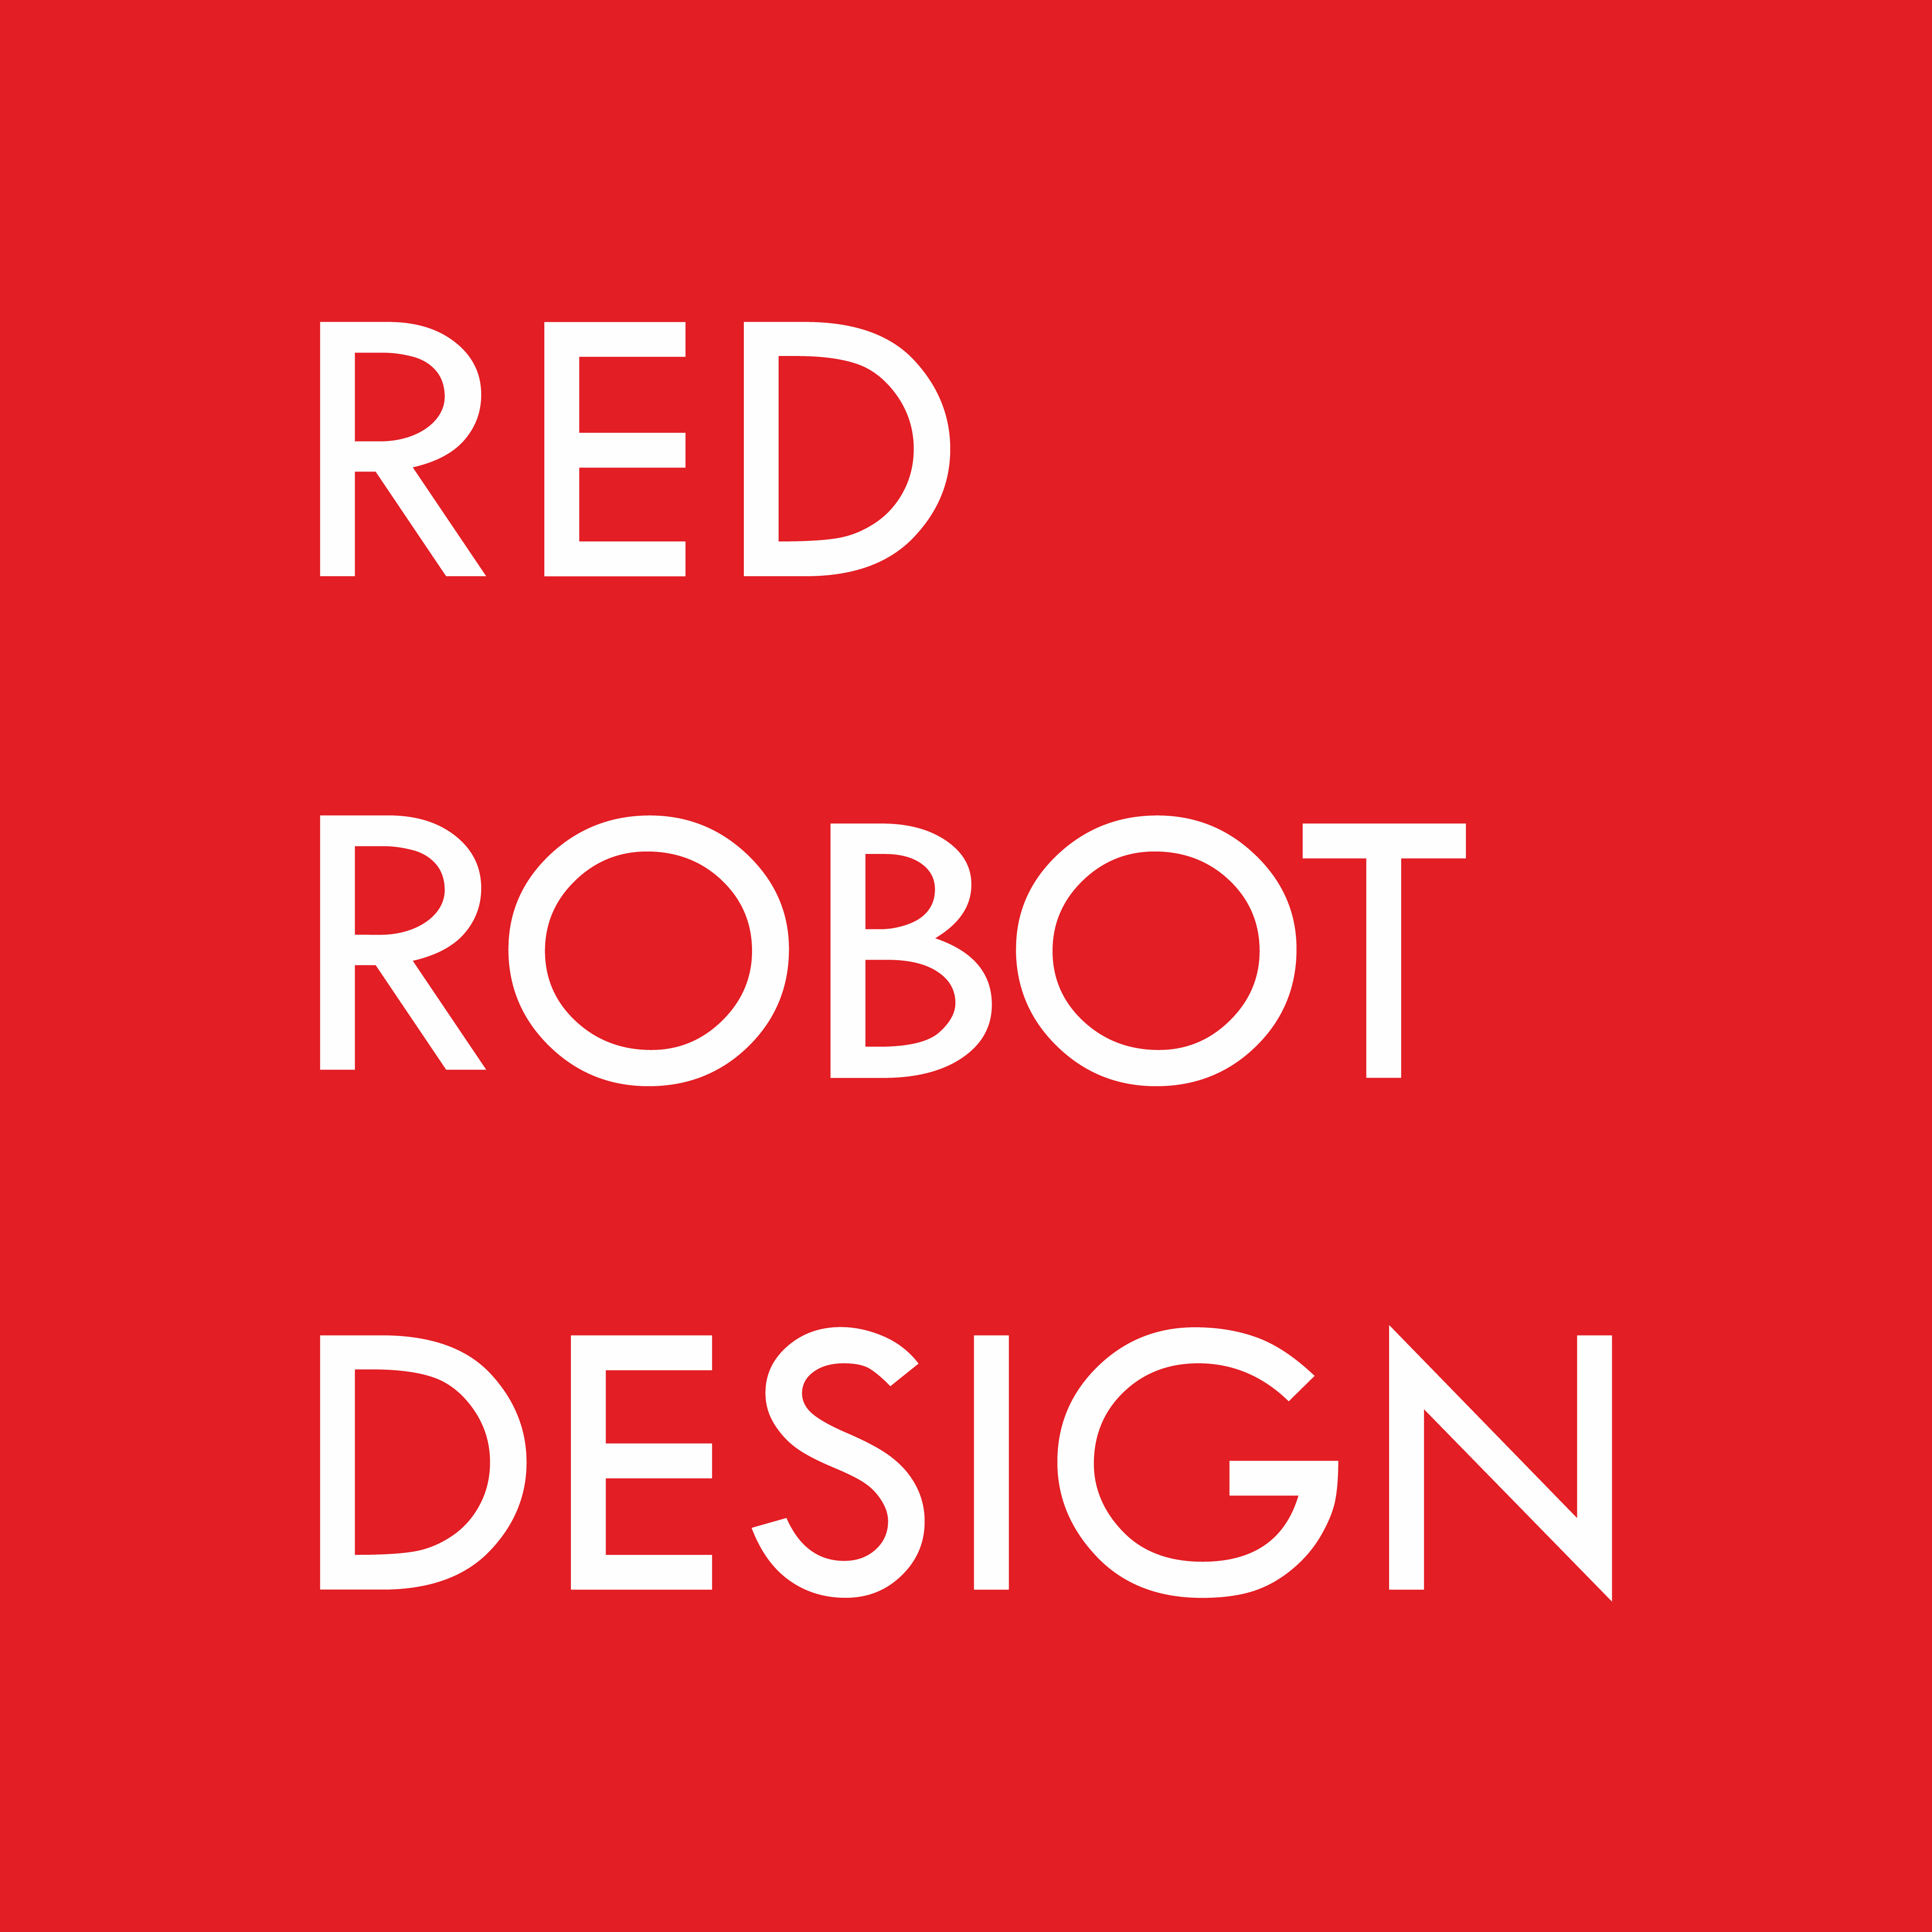 RED ROBOT DESIGN